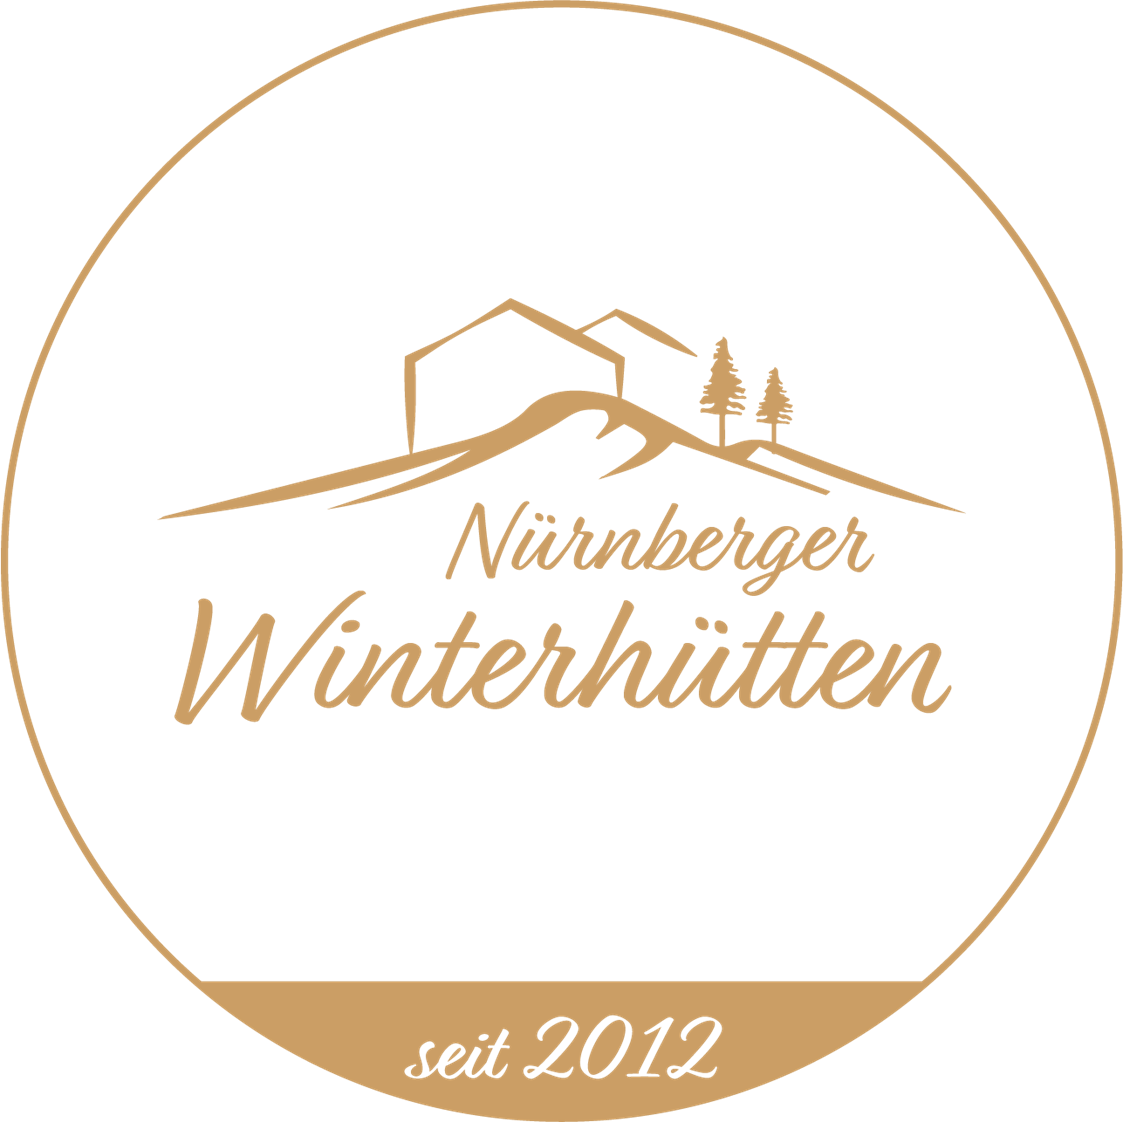 Location: Nürnberger Winterhütten